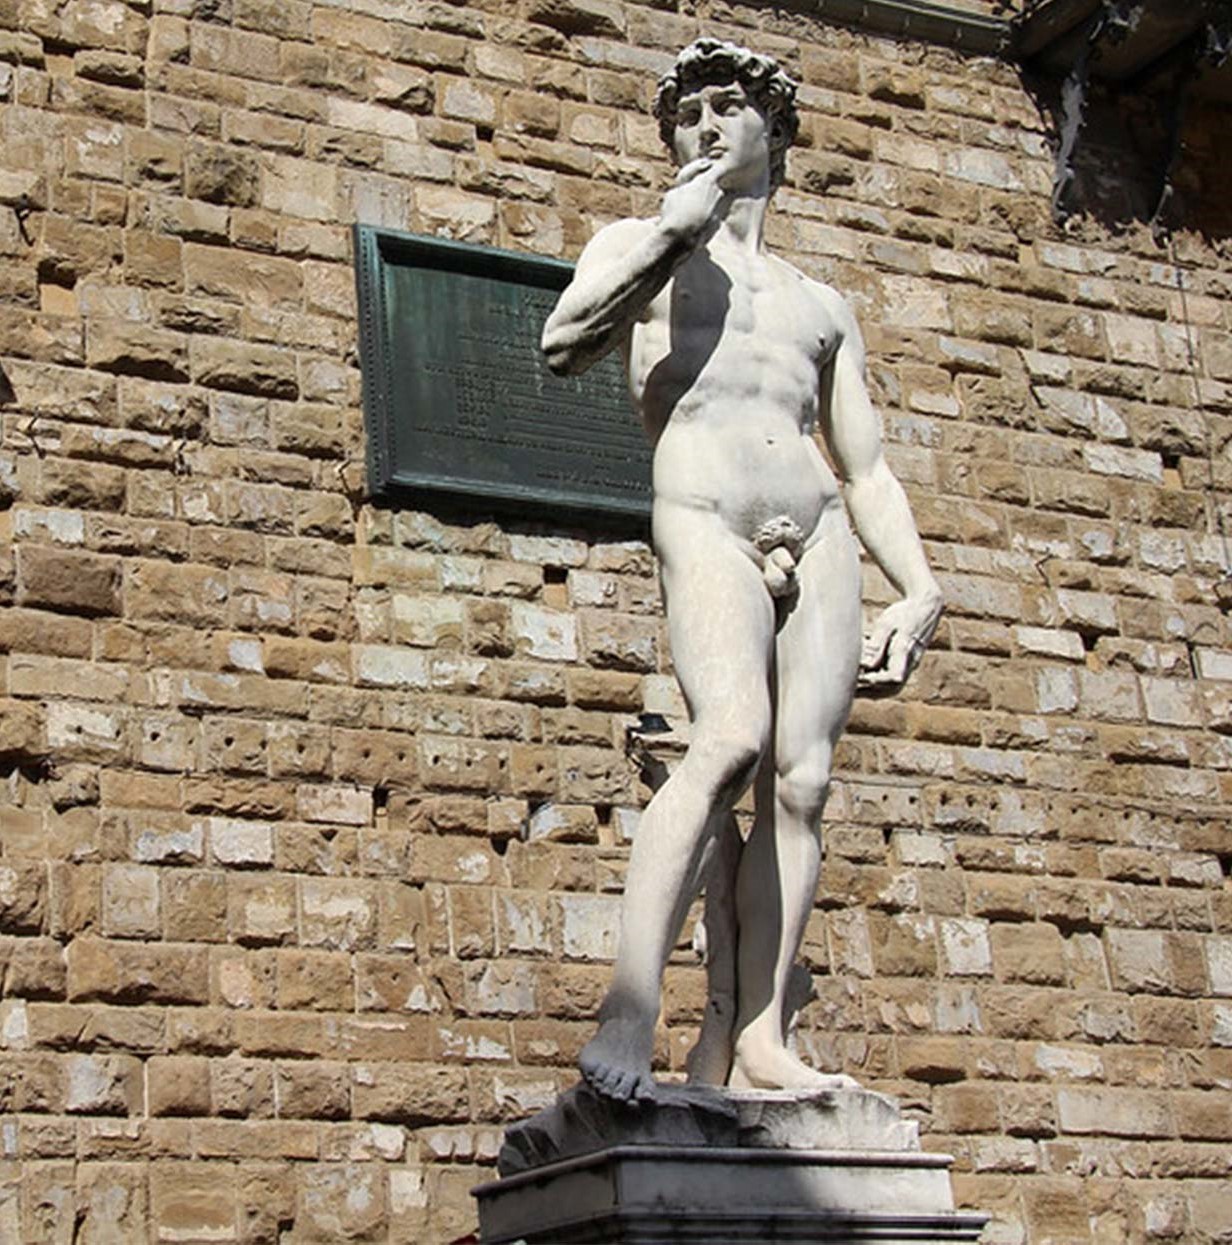 A replica of “David” of Michelangelo